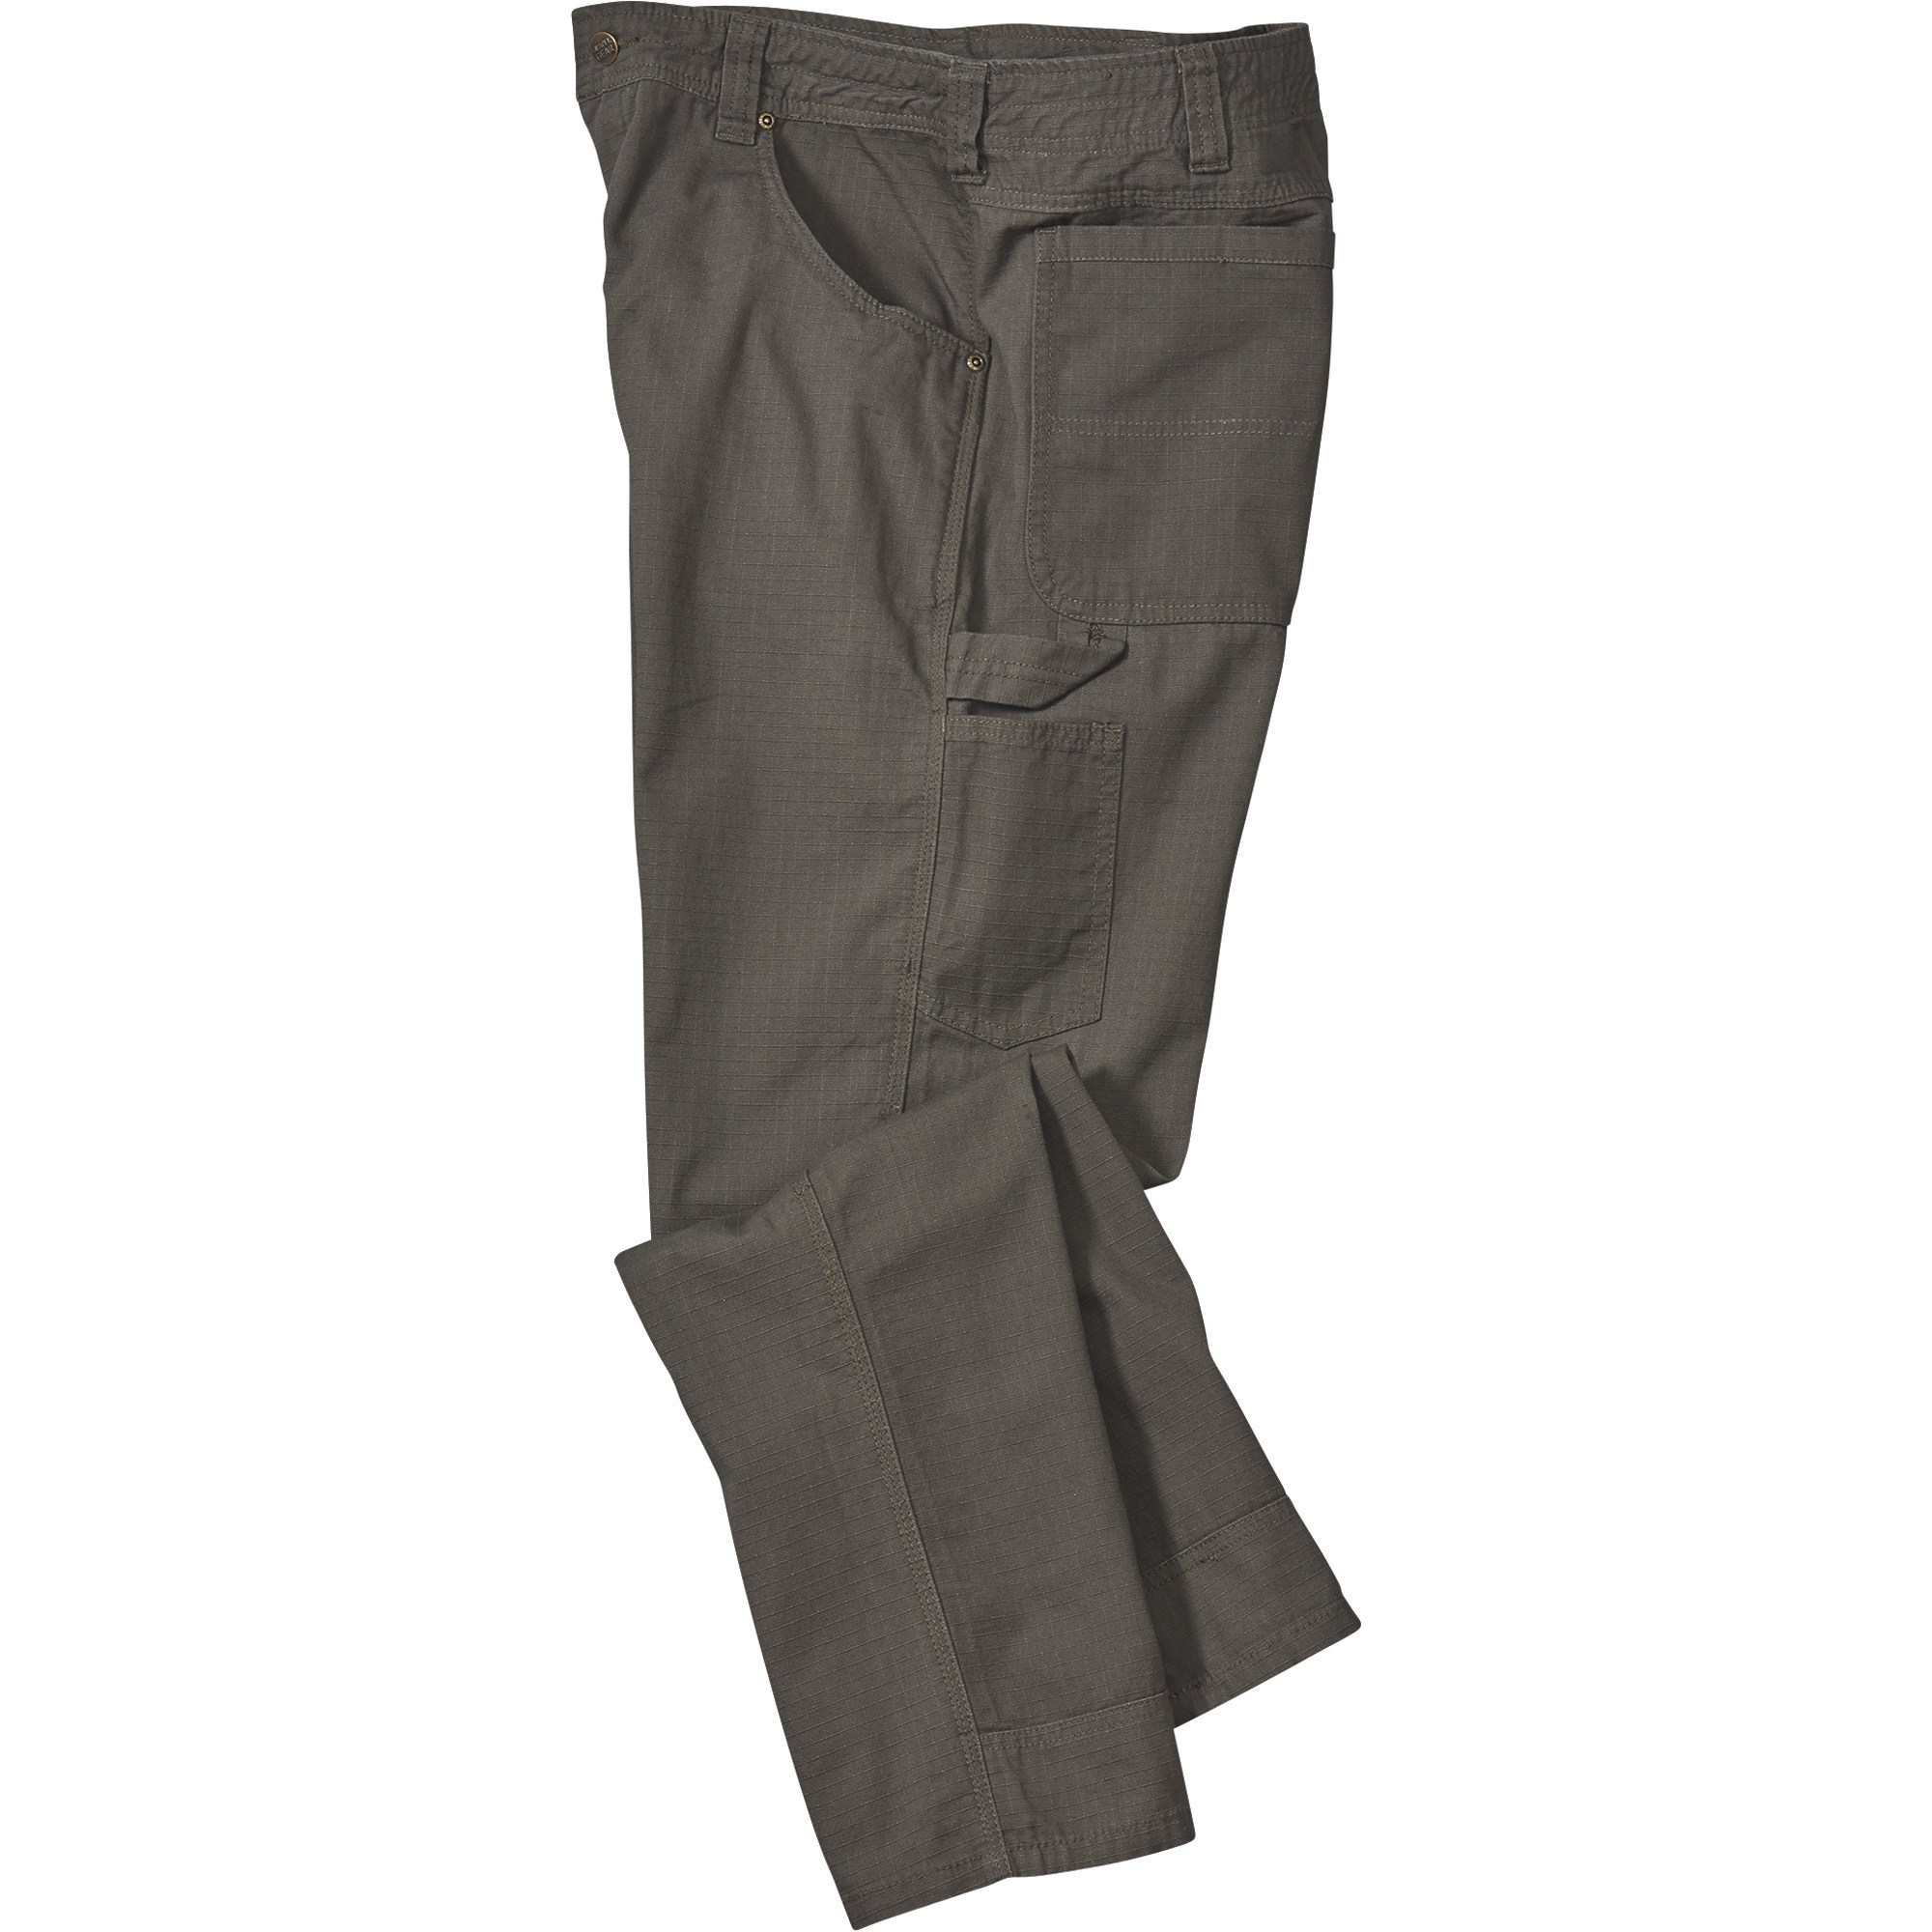 Gravel Gear Men's Cotton Ripstop Carpenter Pants with Teflon Fabric Protector â Moss, 38Inch Waist x 30Inch Inseam